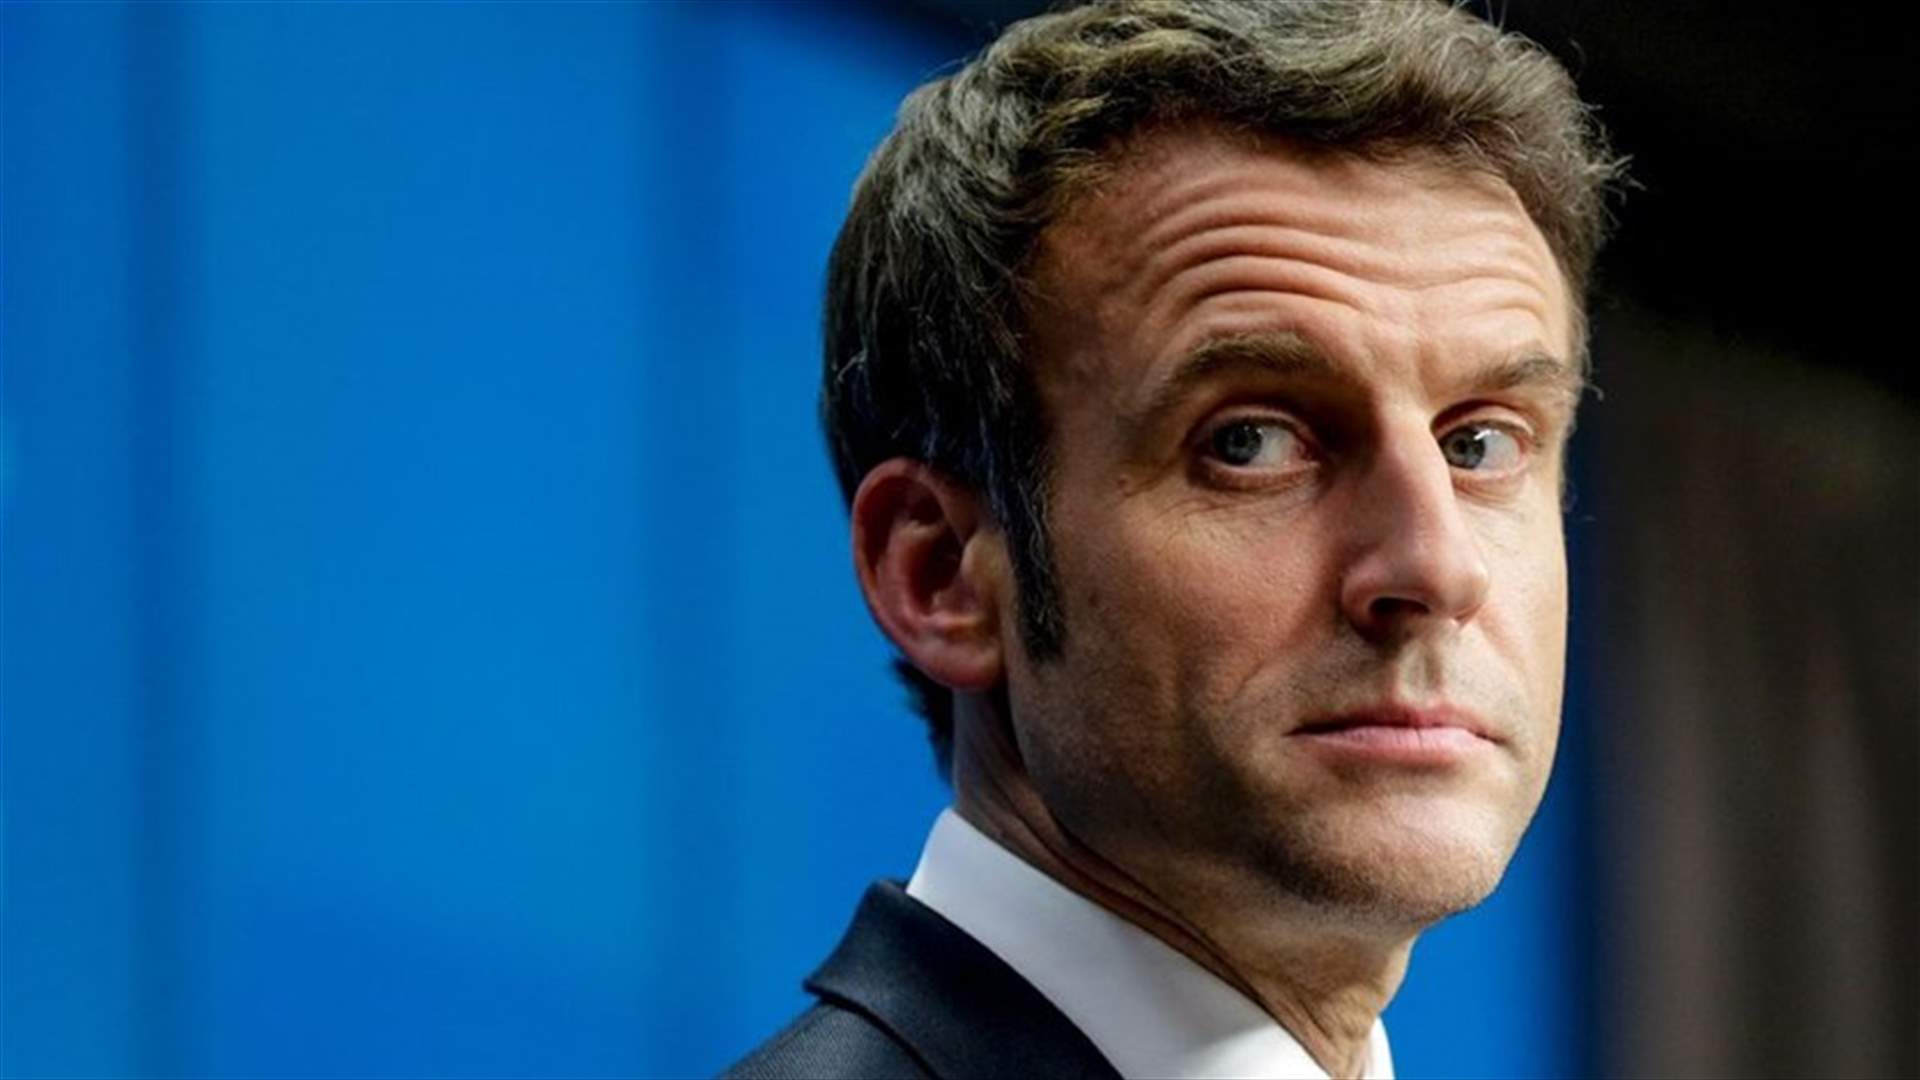 Macron says will take initiatives toward Lebanon in coming weeks